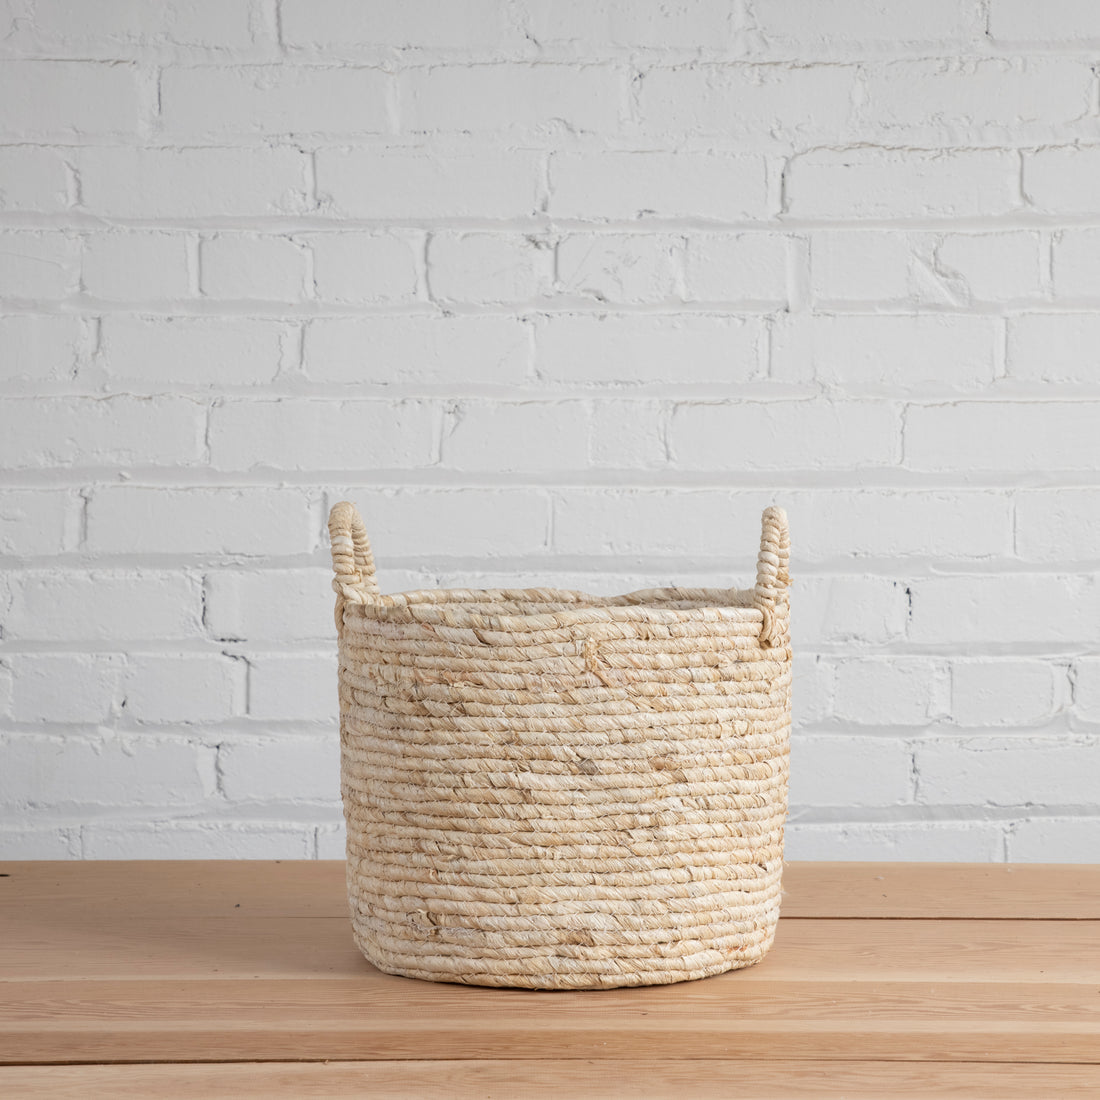 Maiz Basket with Handles, Medium